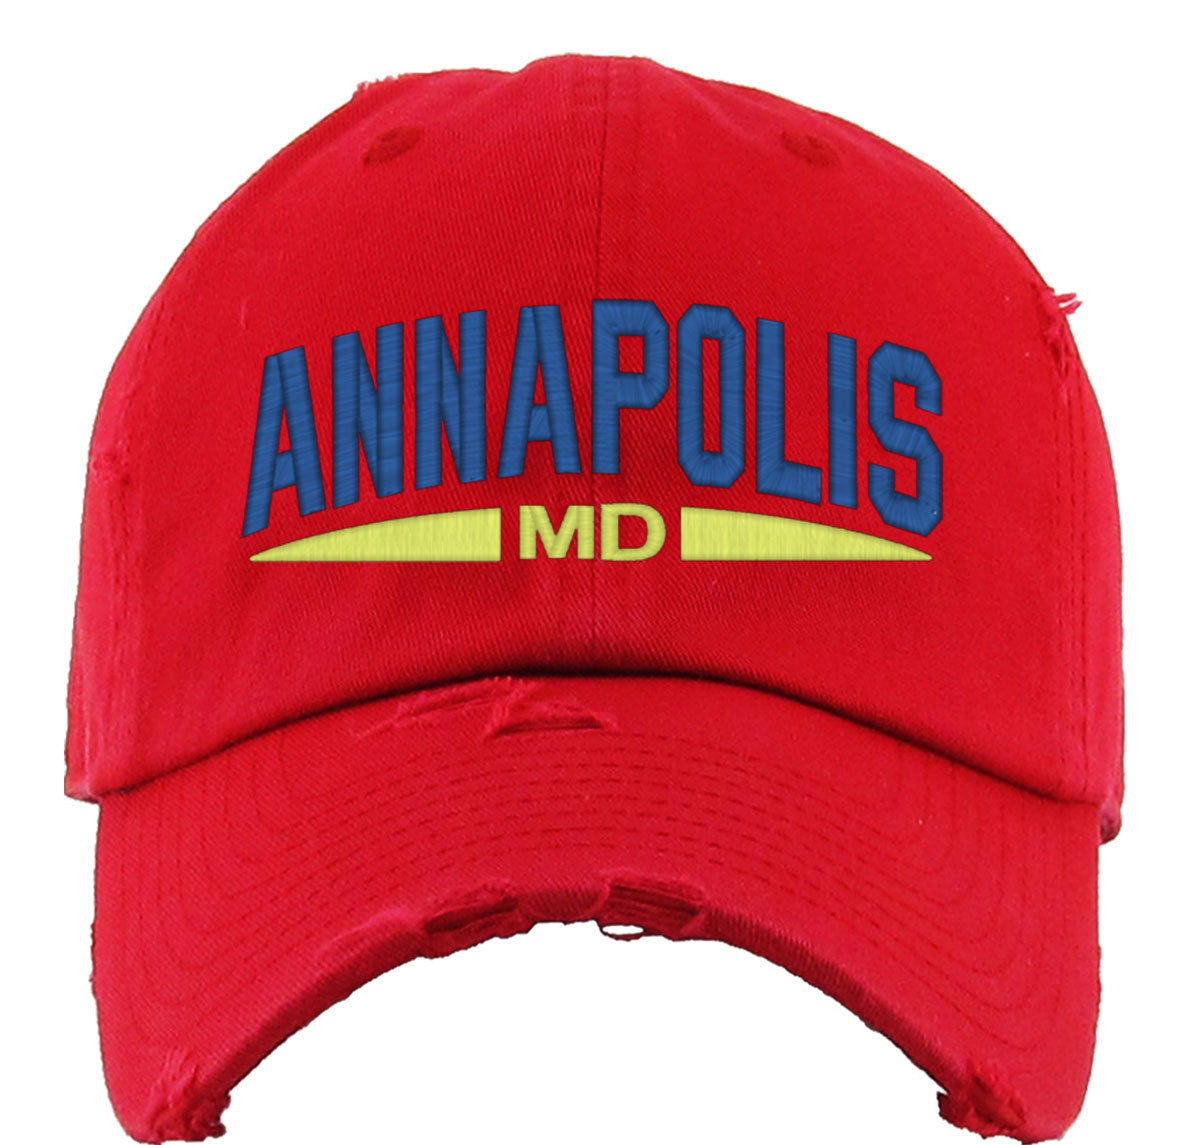 Annapolis Maryland Vintage Baseball Cap